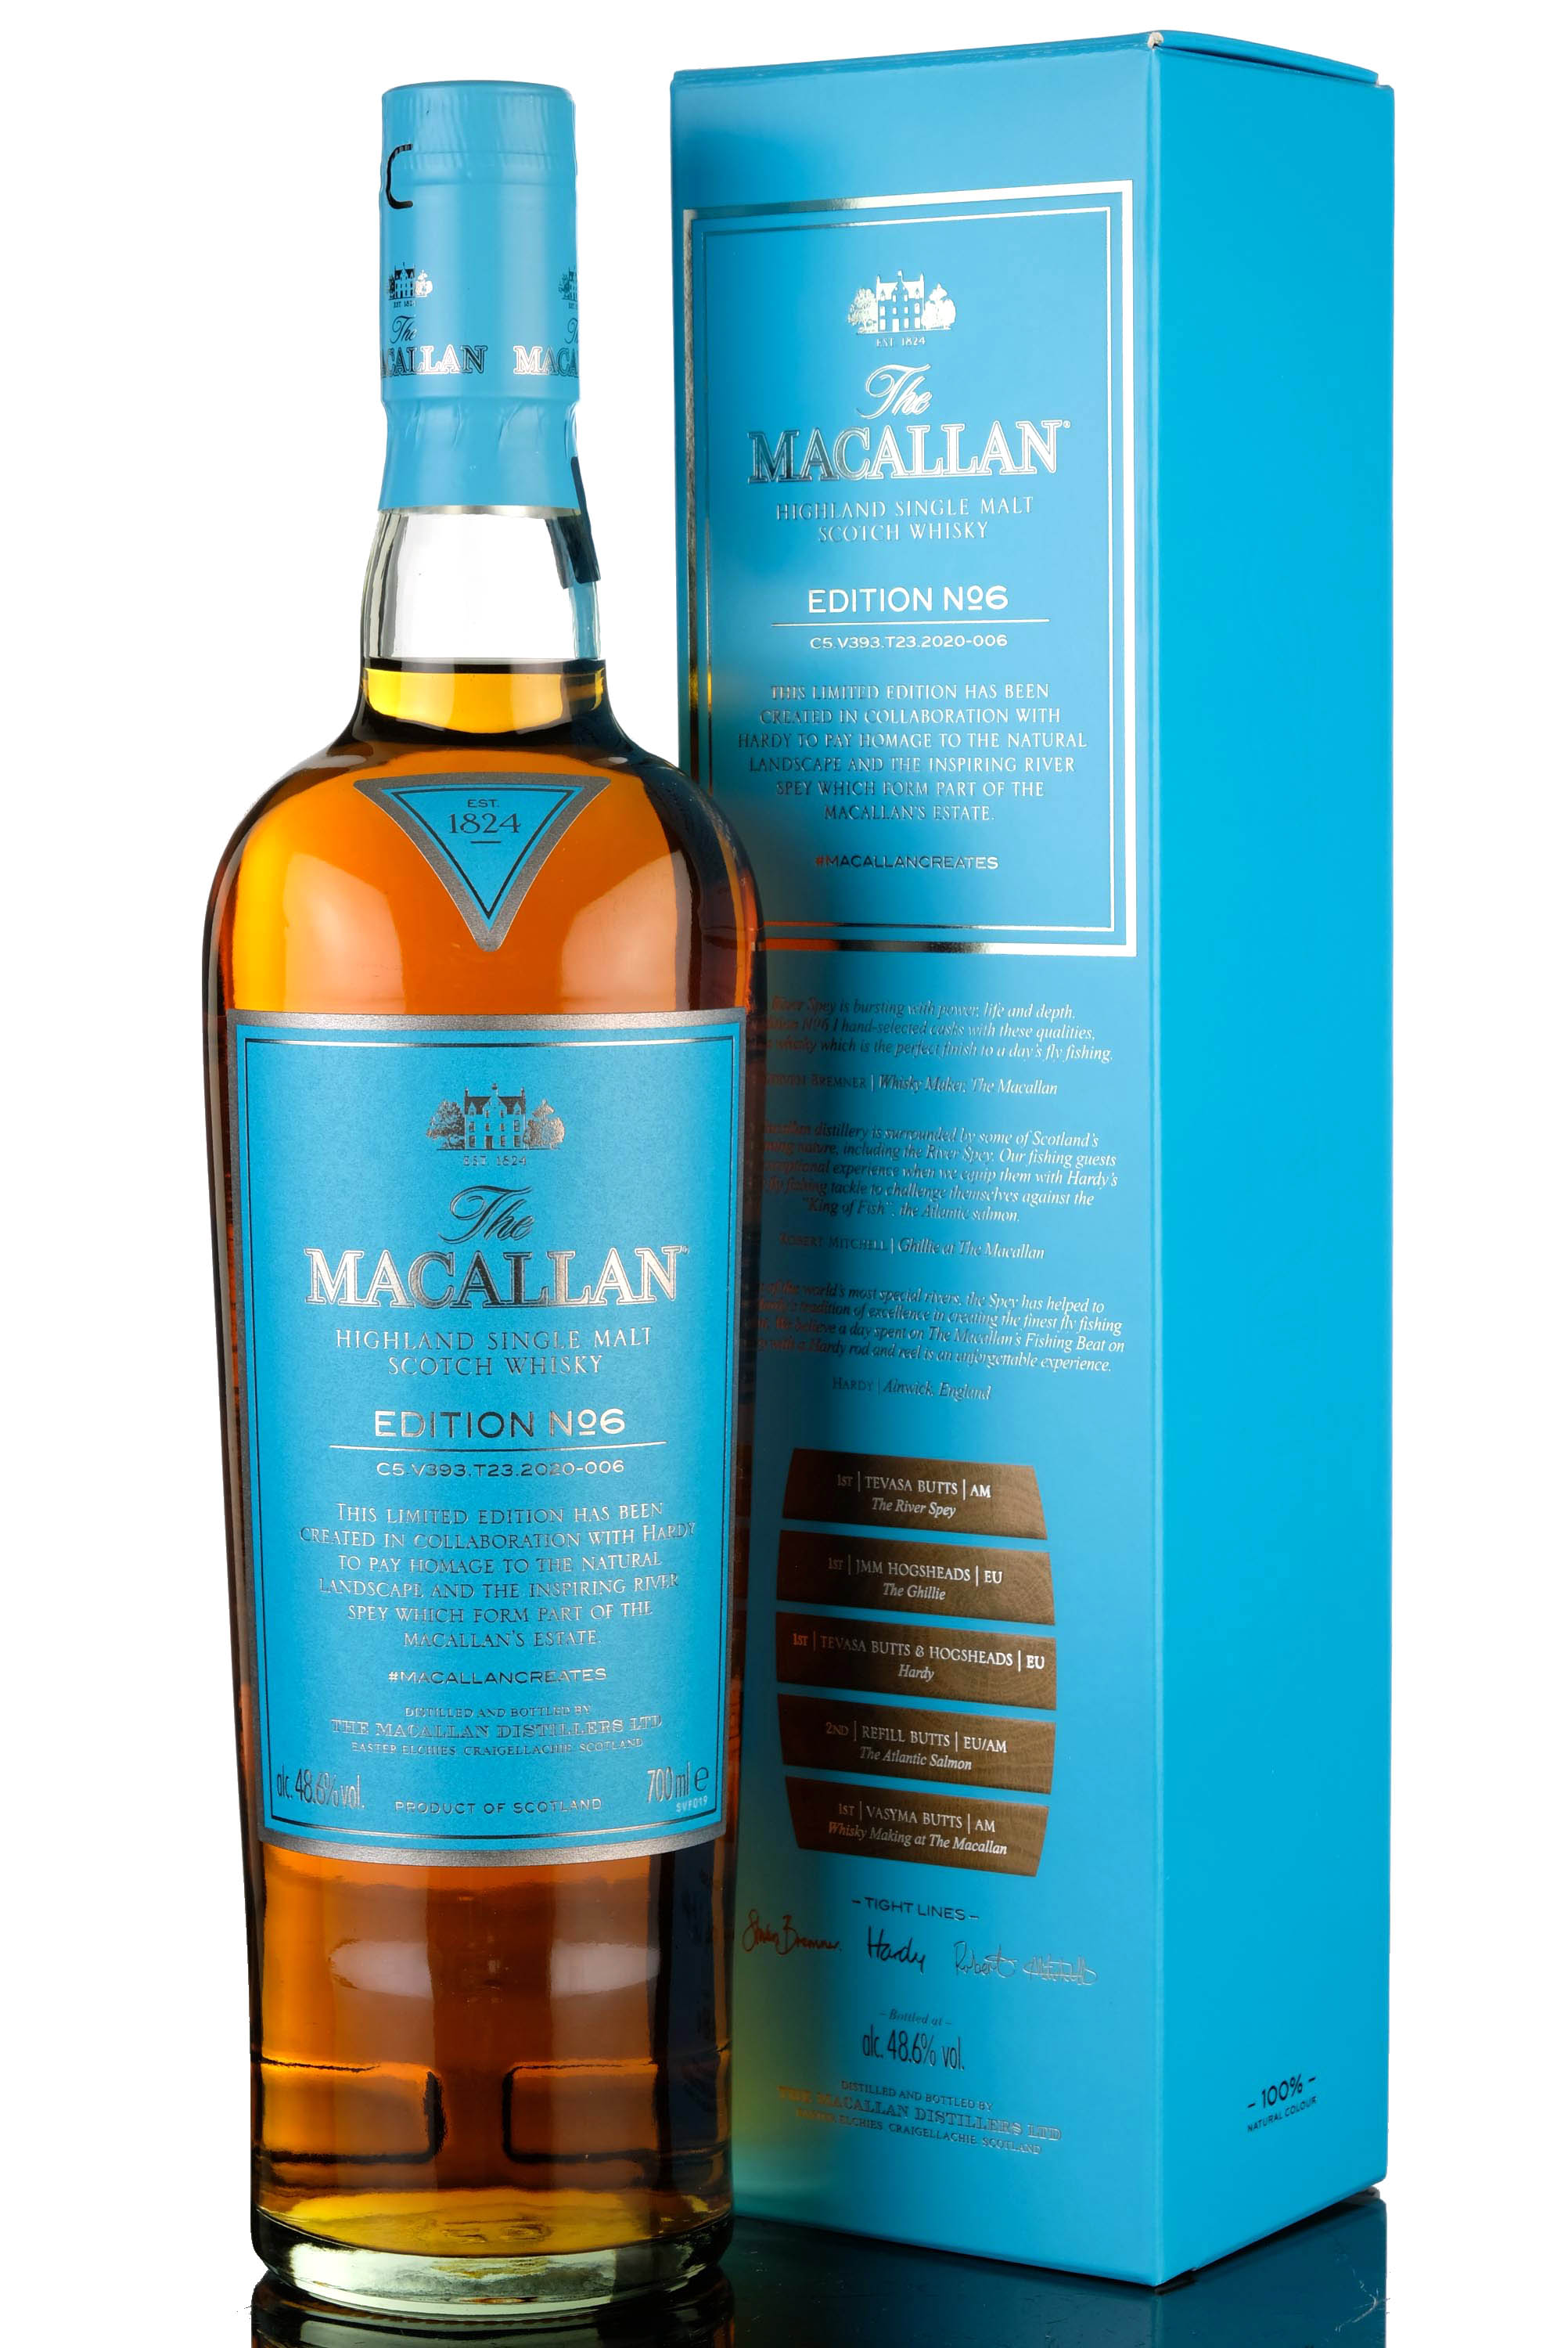 Macallan Edition No6